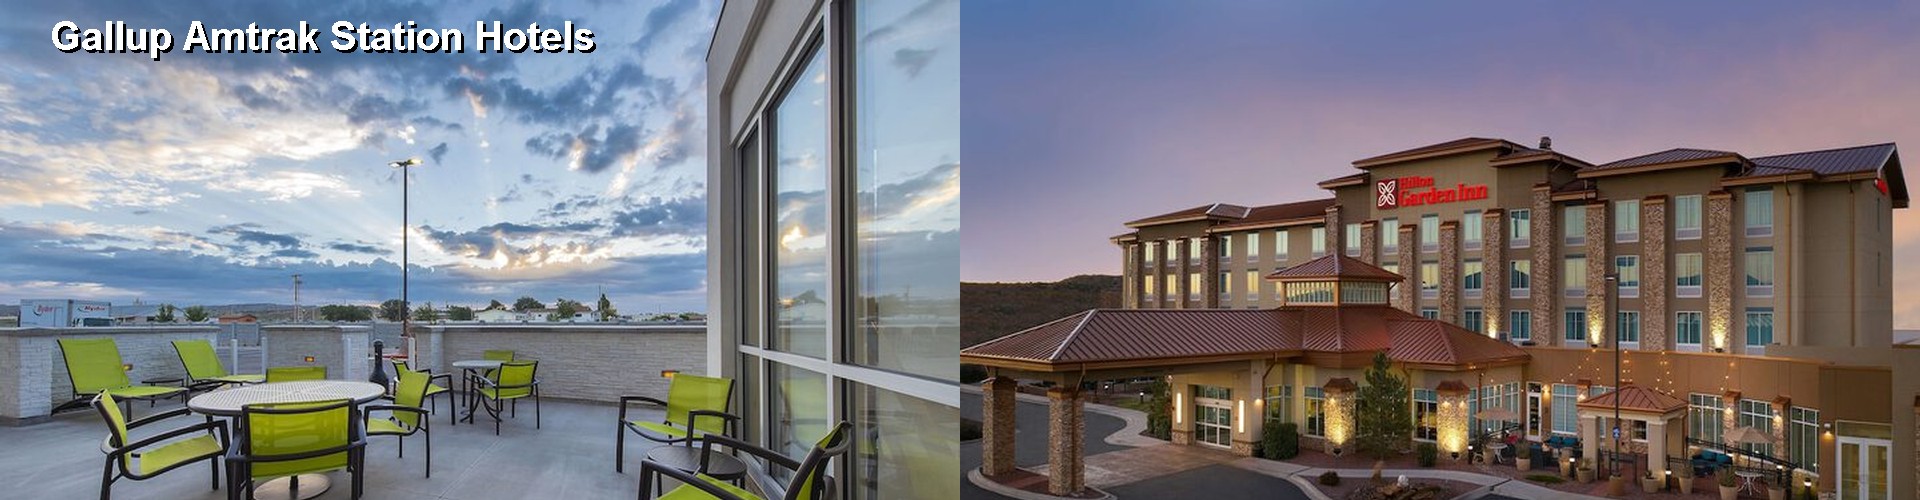 5 Best Hotels near Gallup Amtrak Station